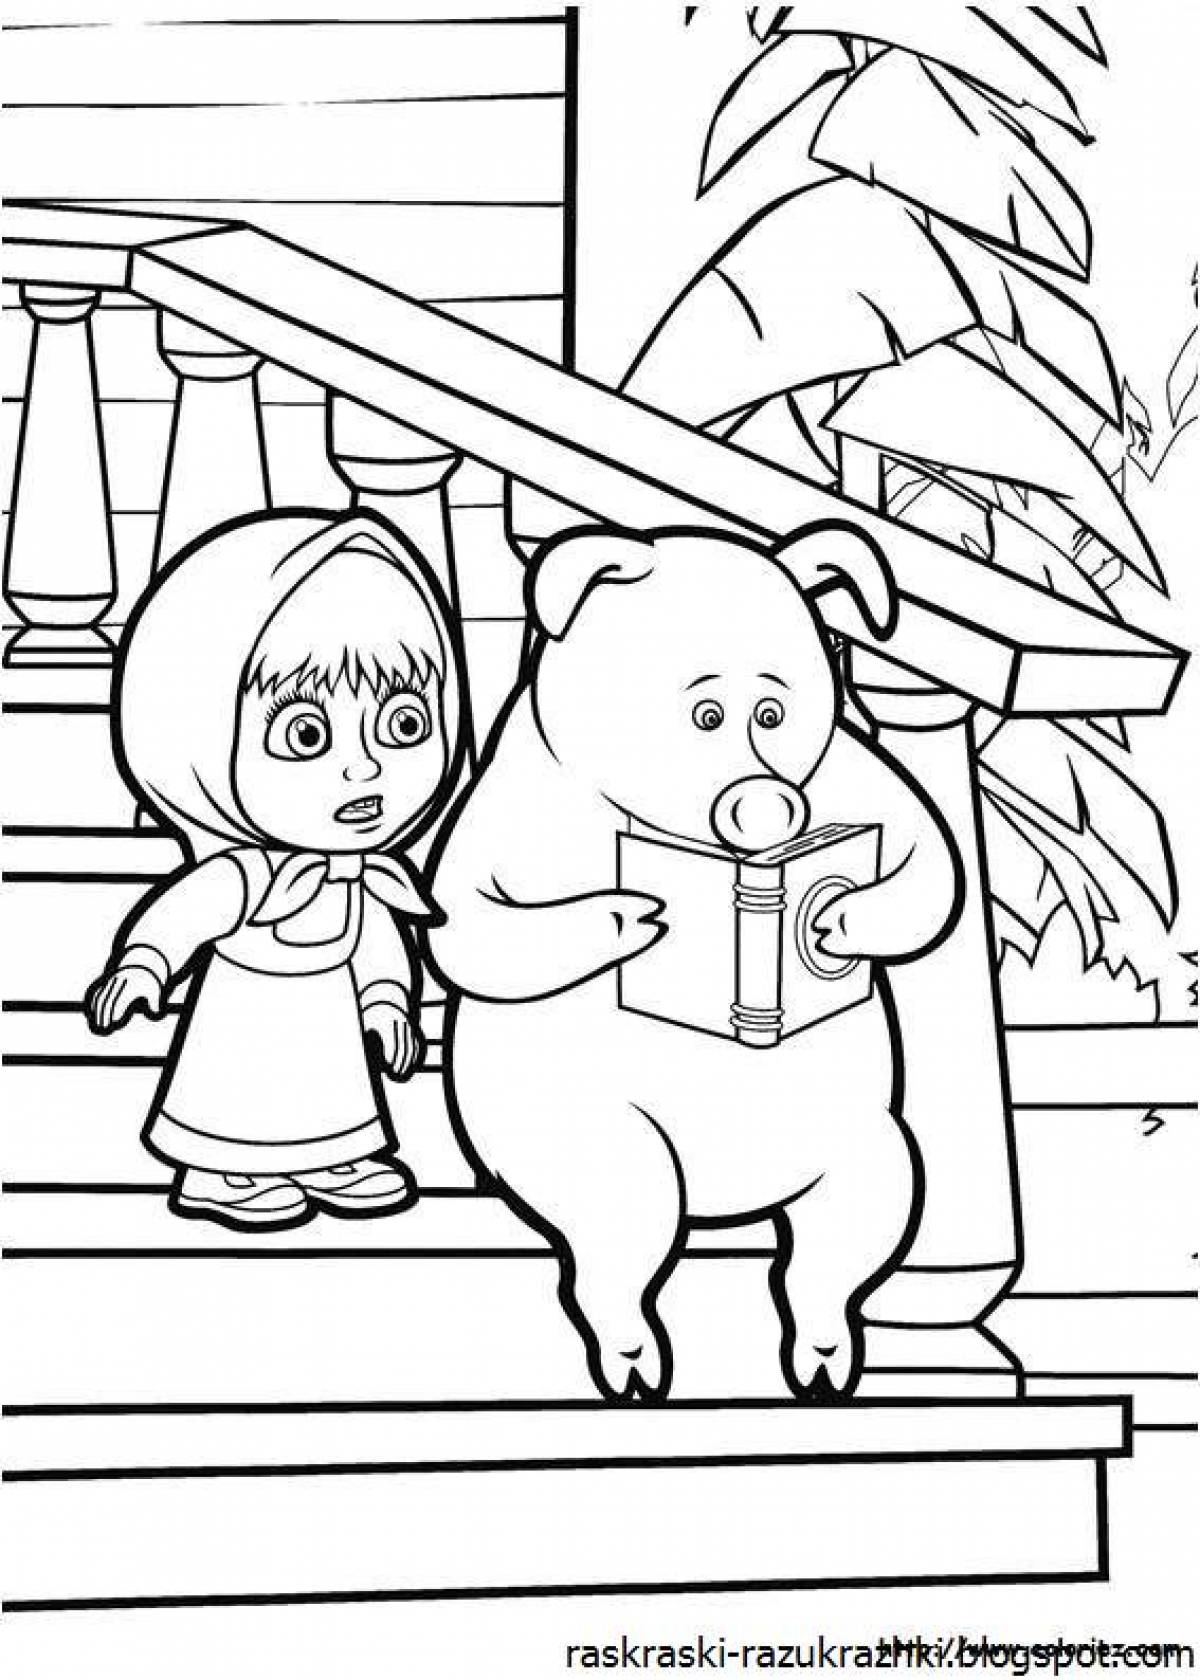 Charming masha and the bear coloring book